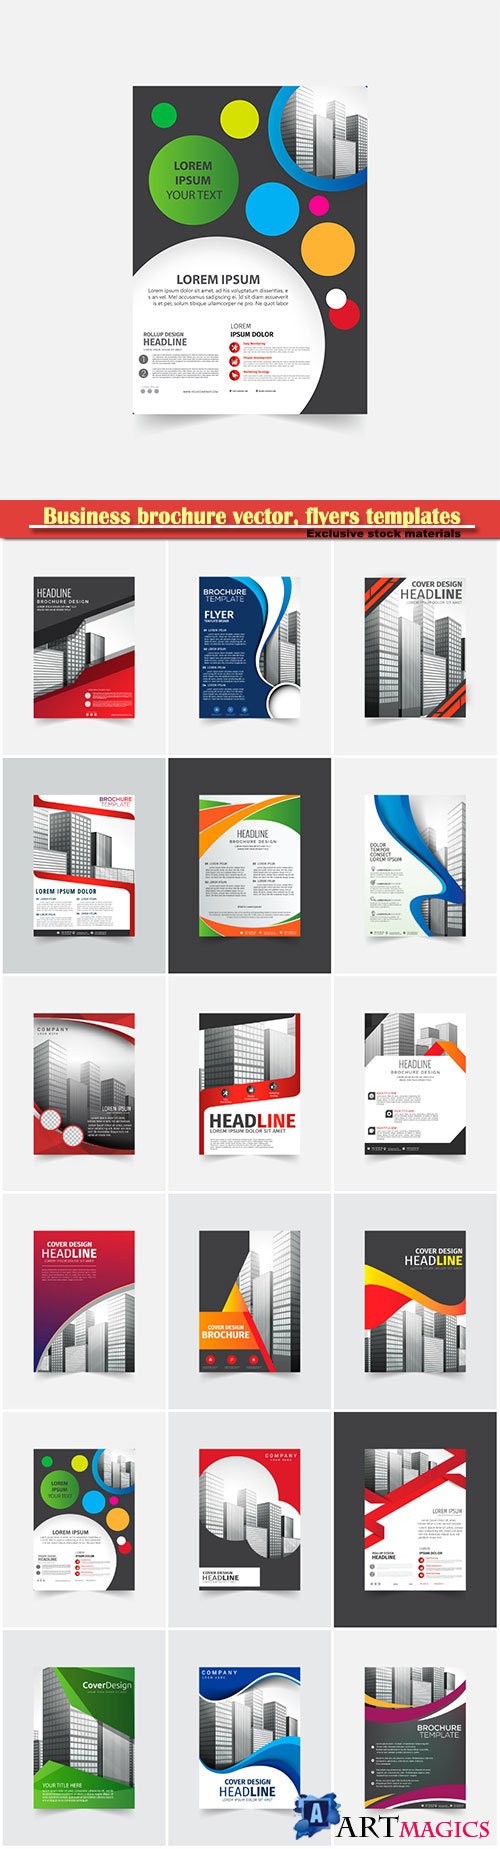 Business brochure vector, flyers templates, report cover design # 104